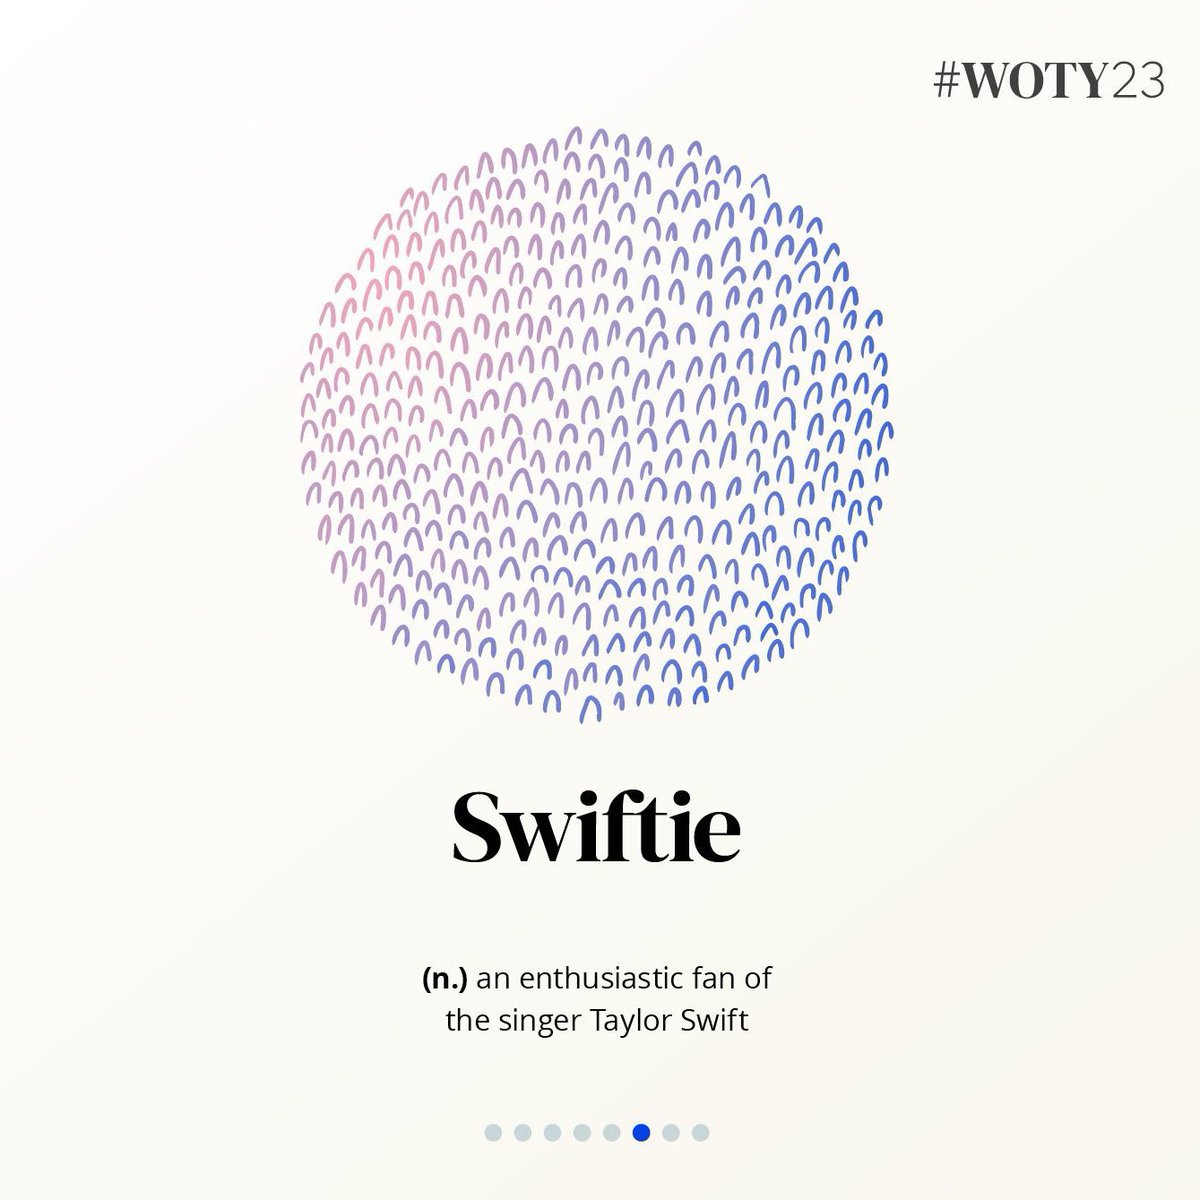 📝 | La palabra ‘Swiftie’ ha sido una de las palabras del año según la lista ‘Words Of The Year’ de Oxford #WOTY23 

— ‘Swiftie: (n.) An enthusiastic fan of the singer Taylor Swift’.